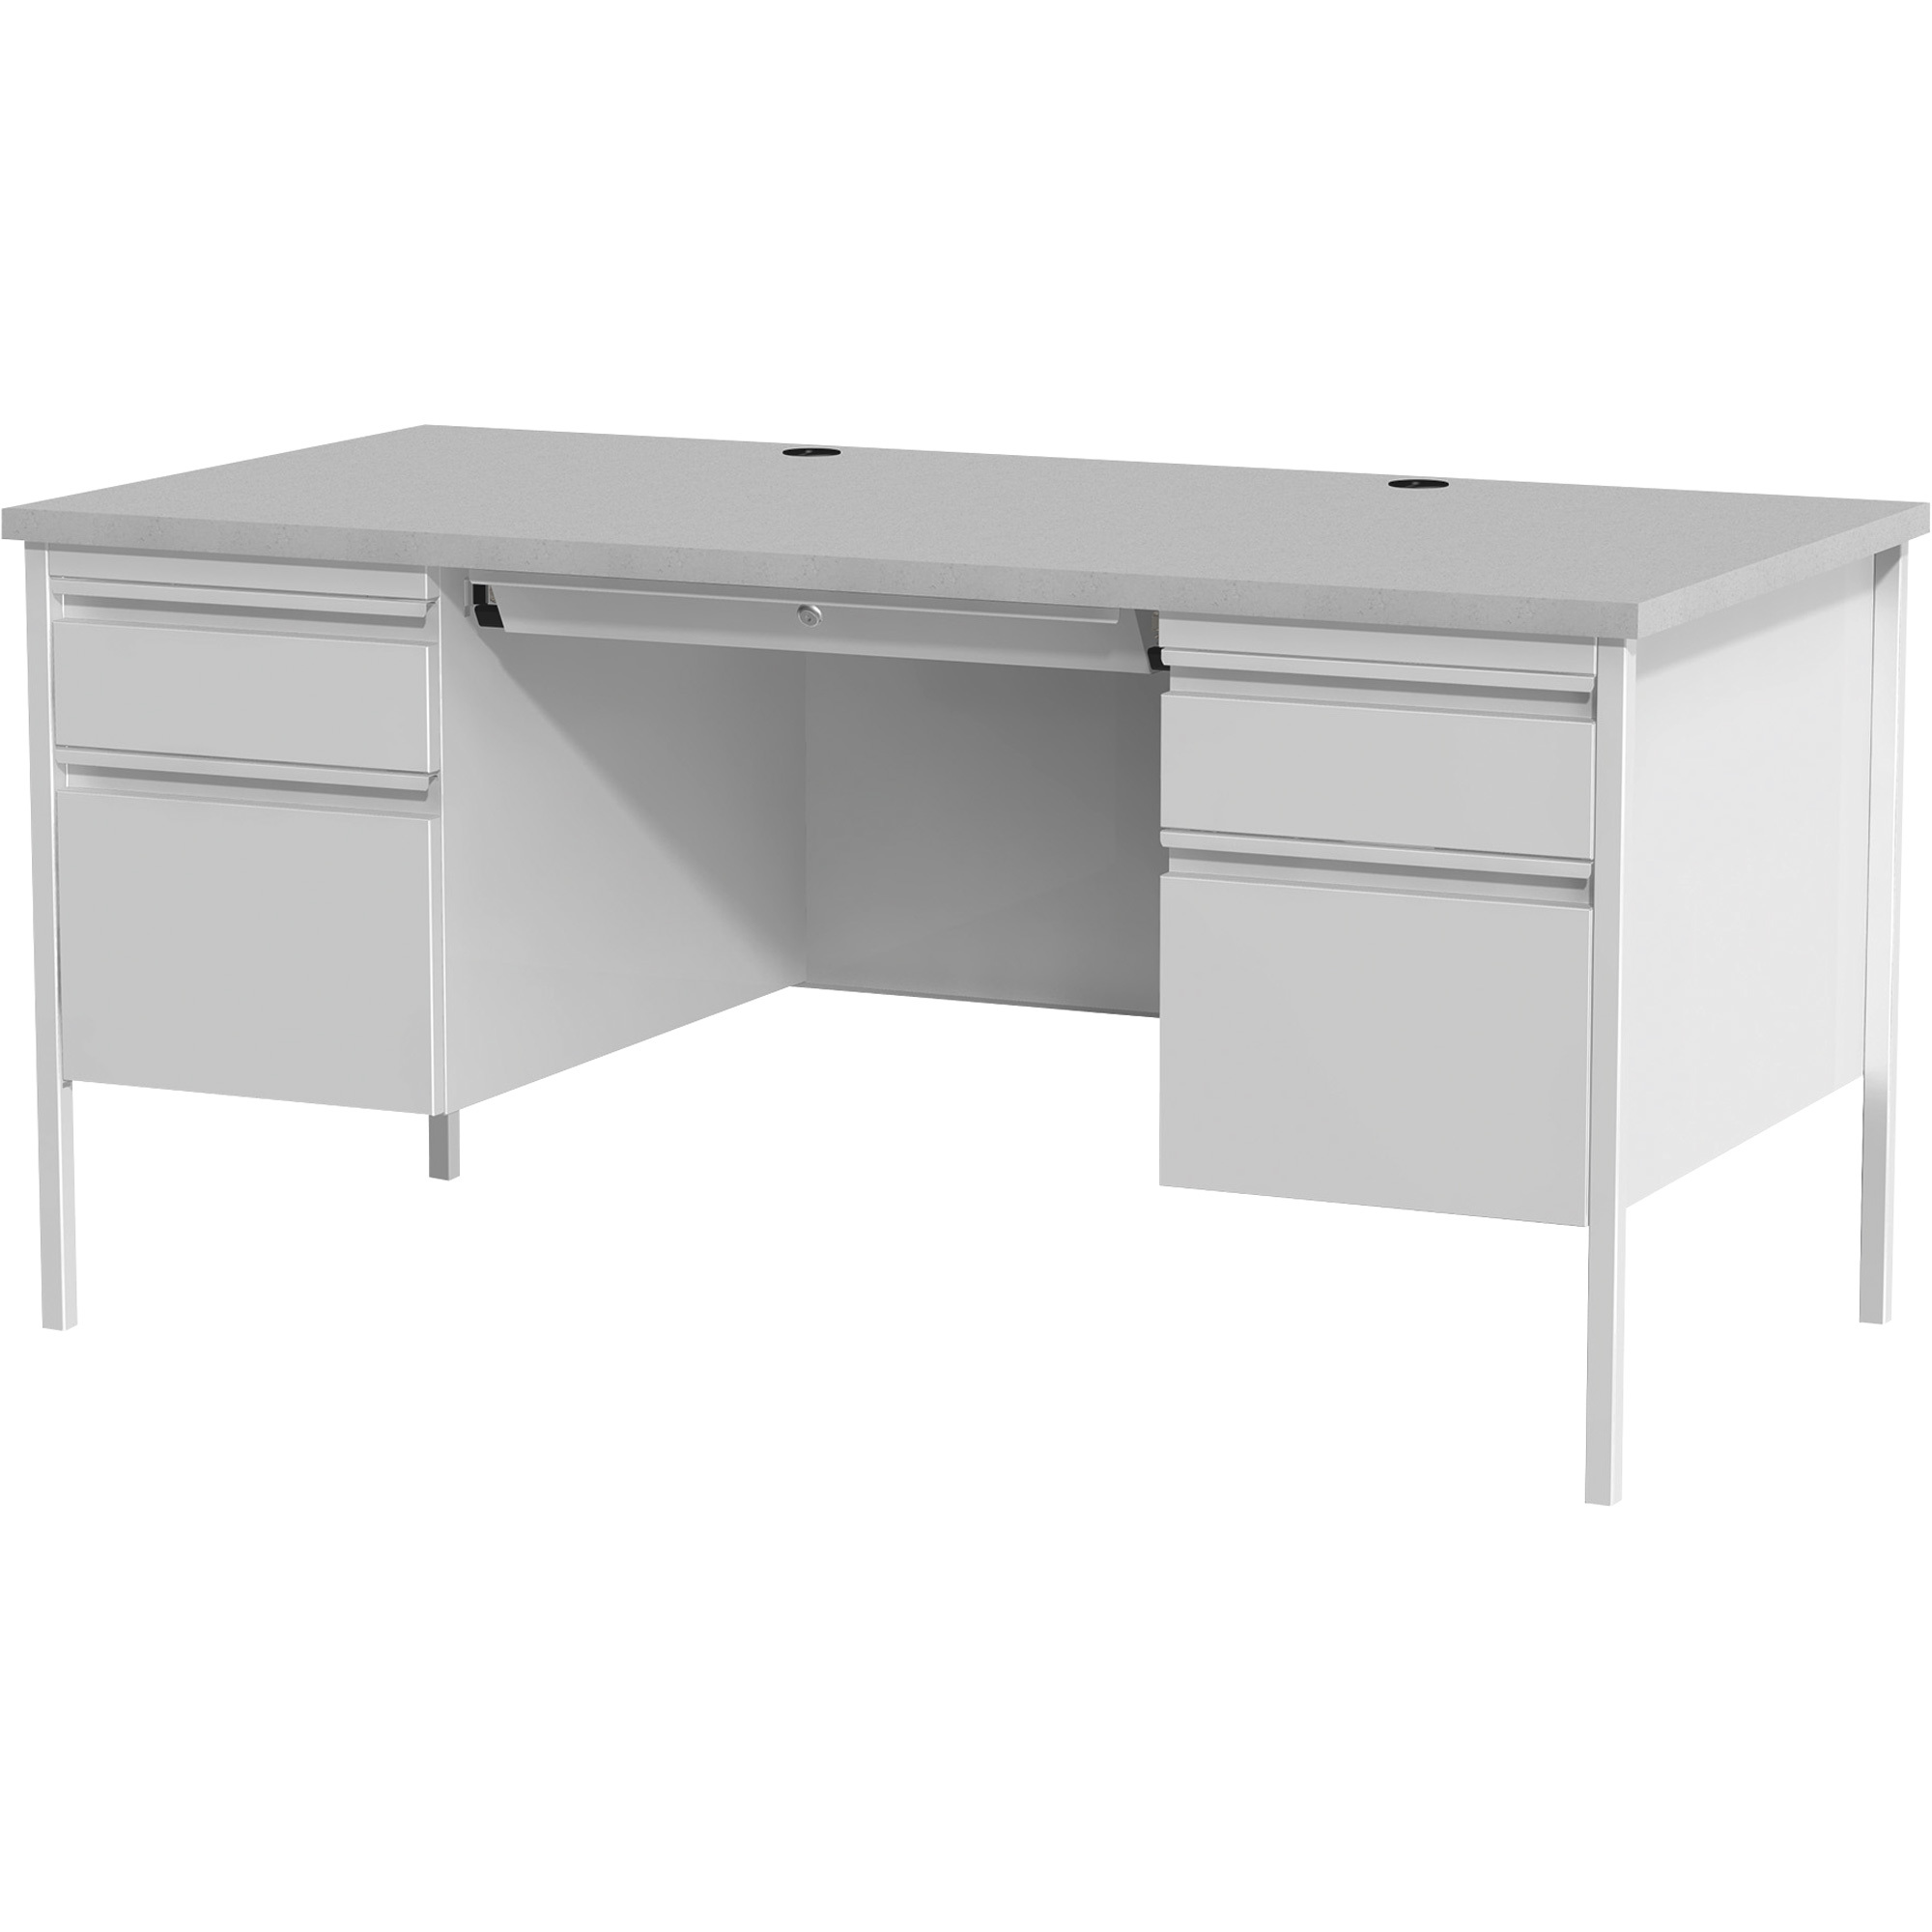 Traditional Pedestal Desk — Gray/Gray, 66Inch W x 30Inch D x 29 1/2Inch H, Model - Hirsh Industries 20103